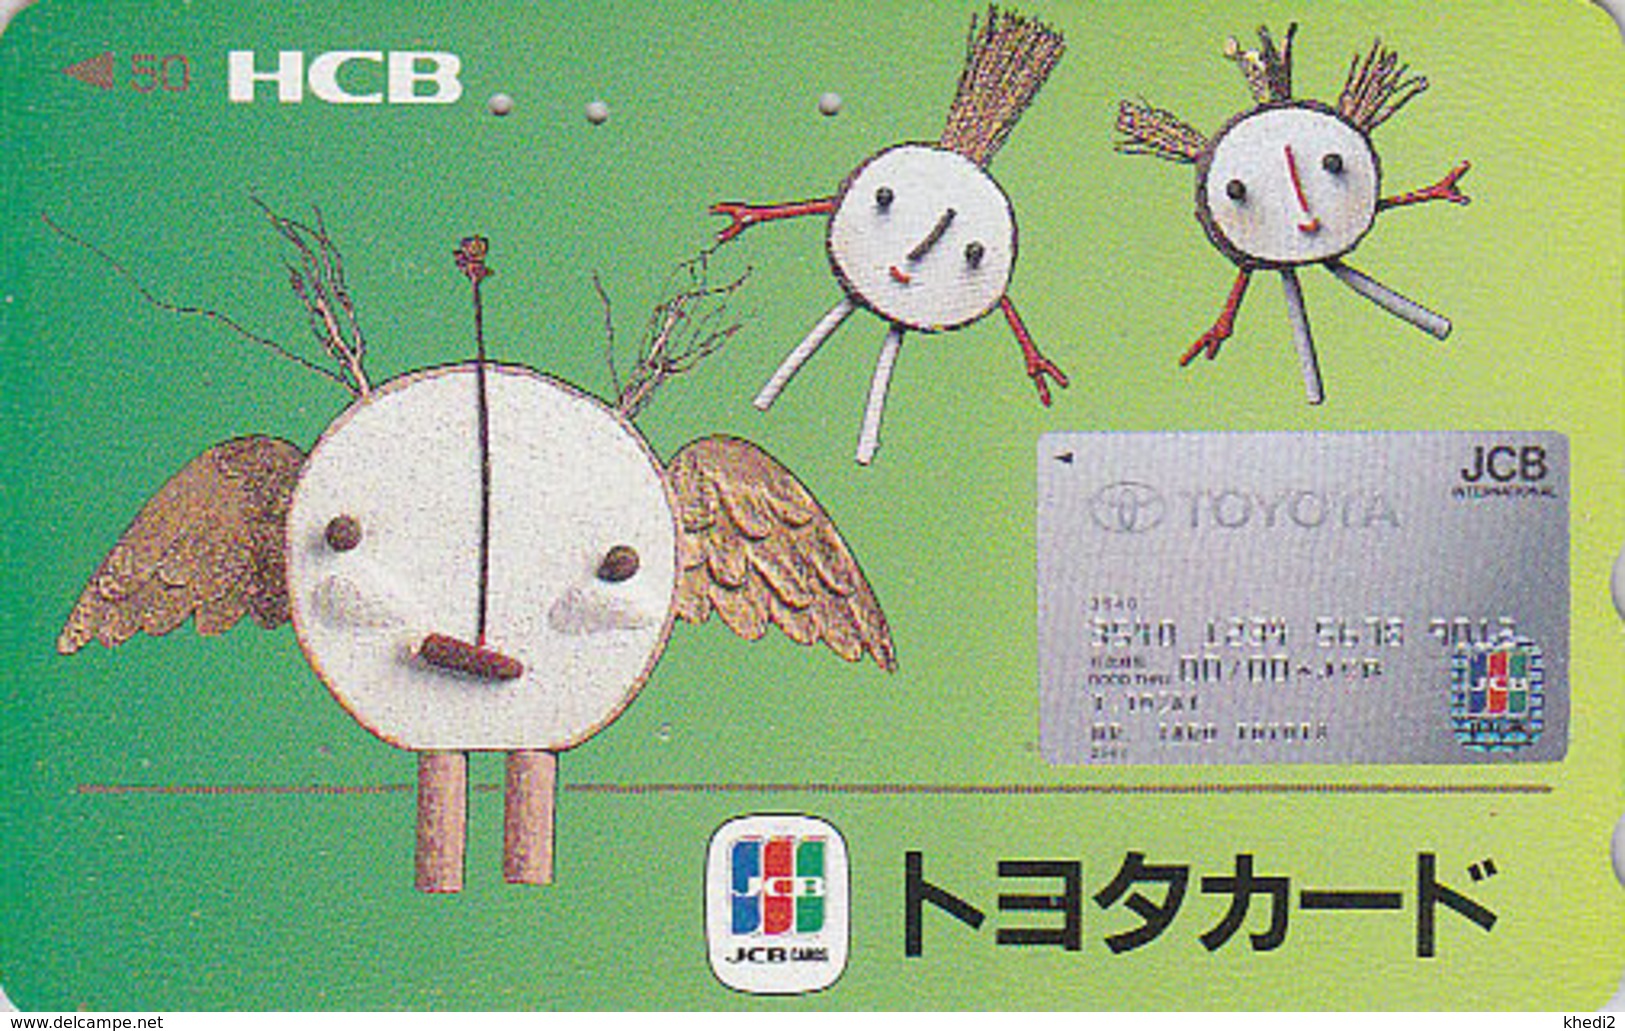 Owls - Télécarte Japon / 110-011 - Animal - Oiseau HIBOU Banque - OWL bird  / JCB Bank Japan phonecard - EULE TK Toyota - 2143